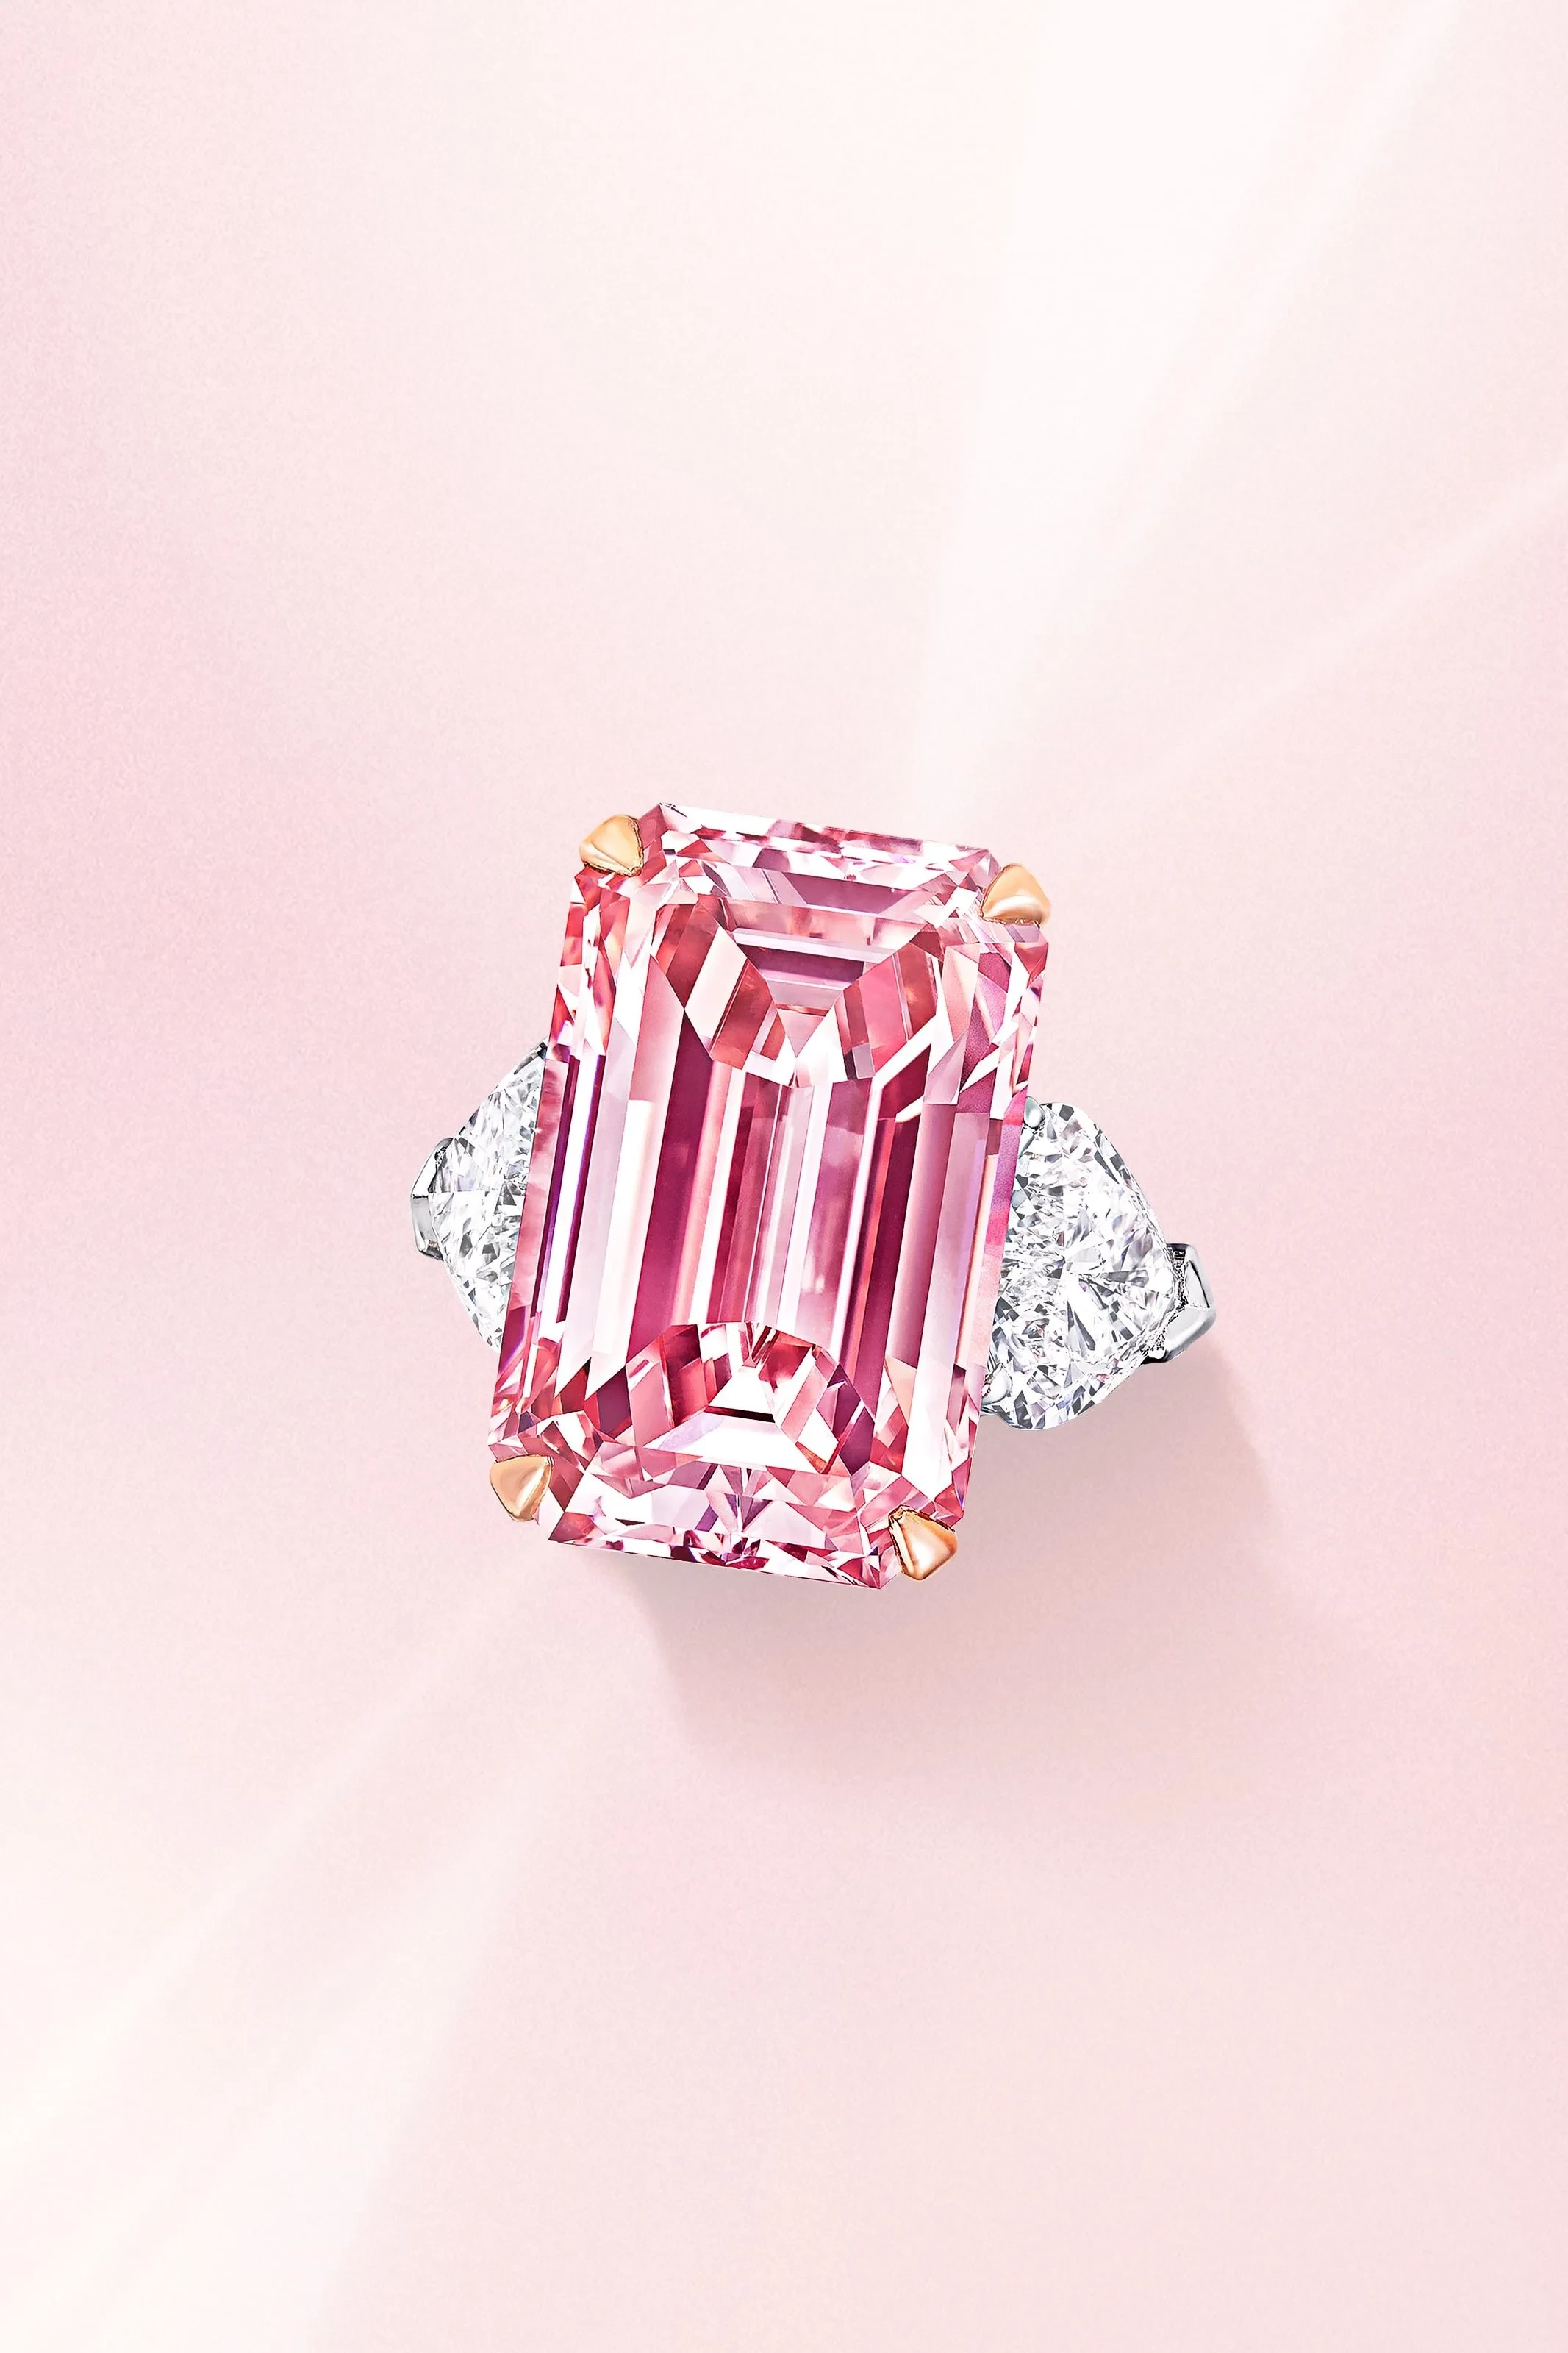 MAZ_EPD_HIJ_Pink-Diamonds_Graff-Emerald-Cut-Pink-Diamond-Ring_IMG_4x5-min-edited